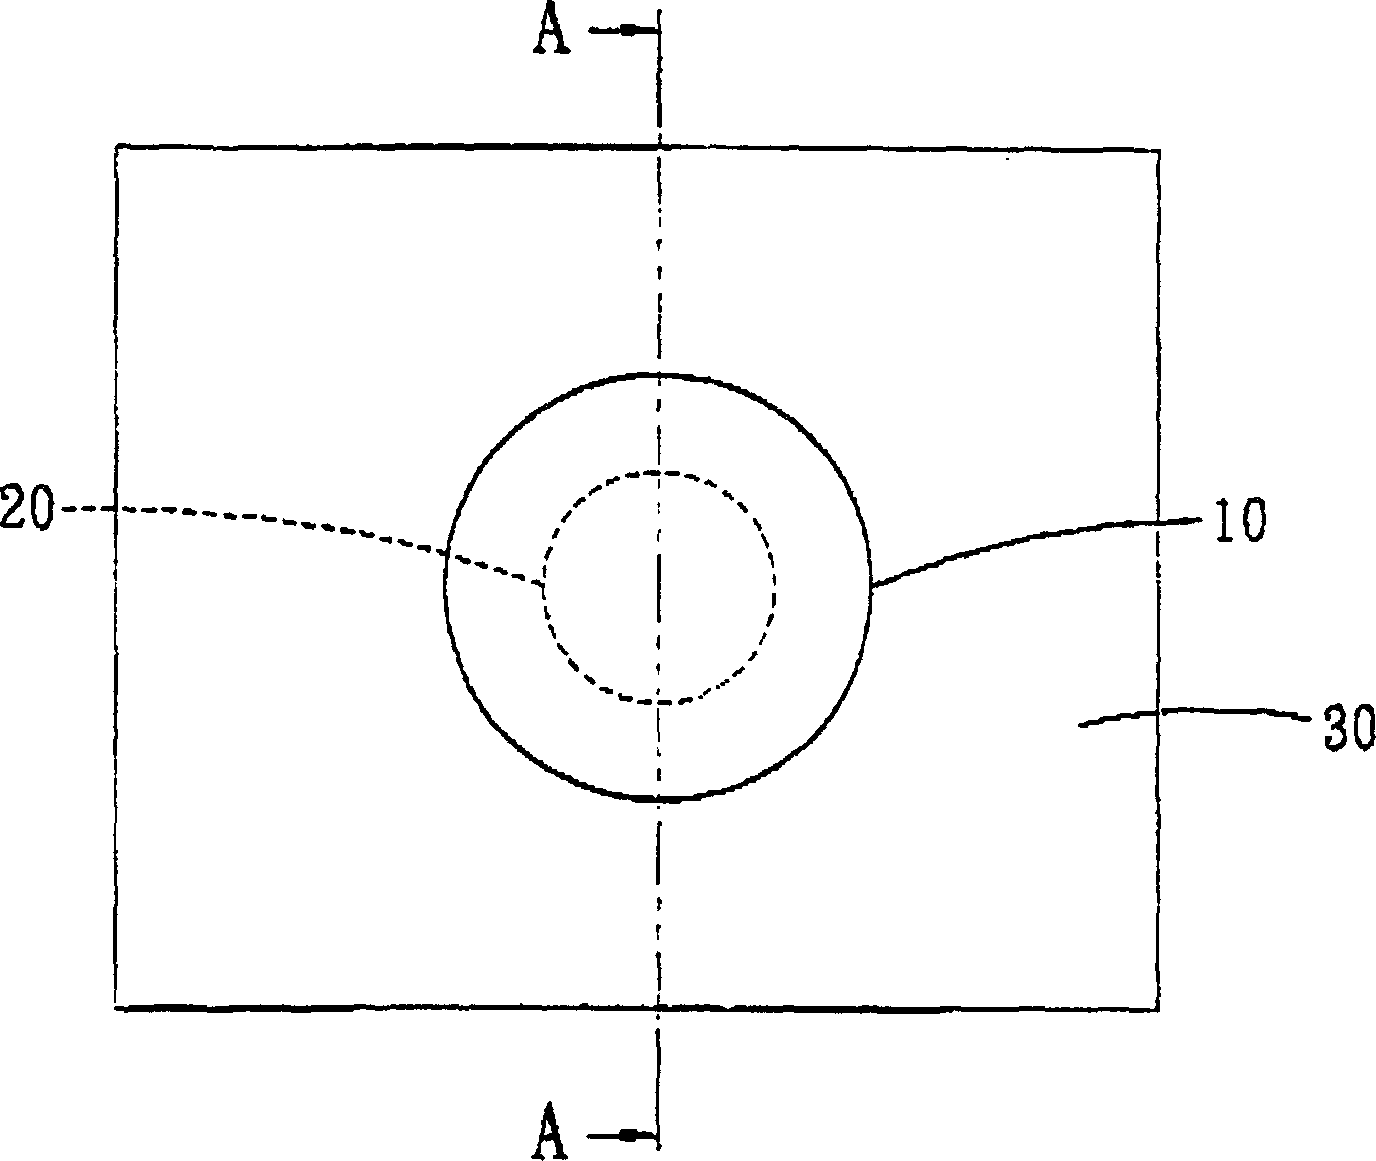 Linear step motor position sensing system